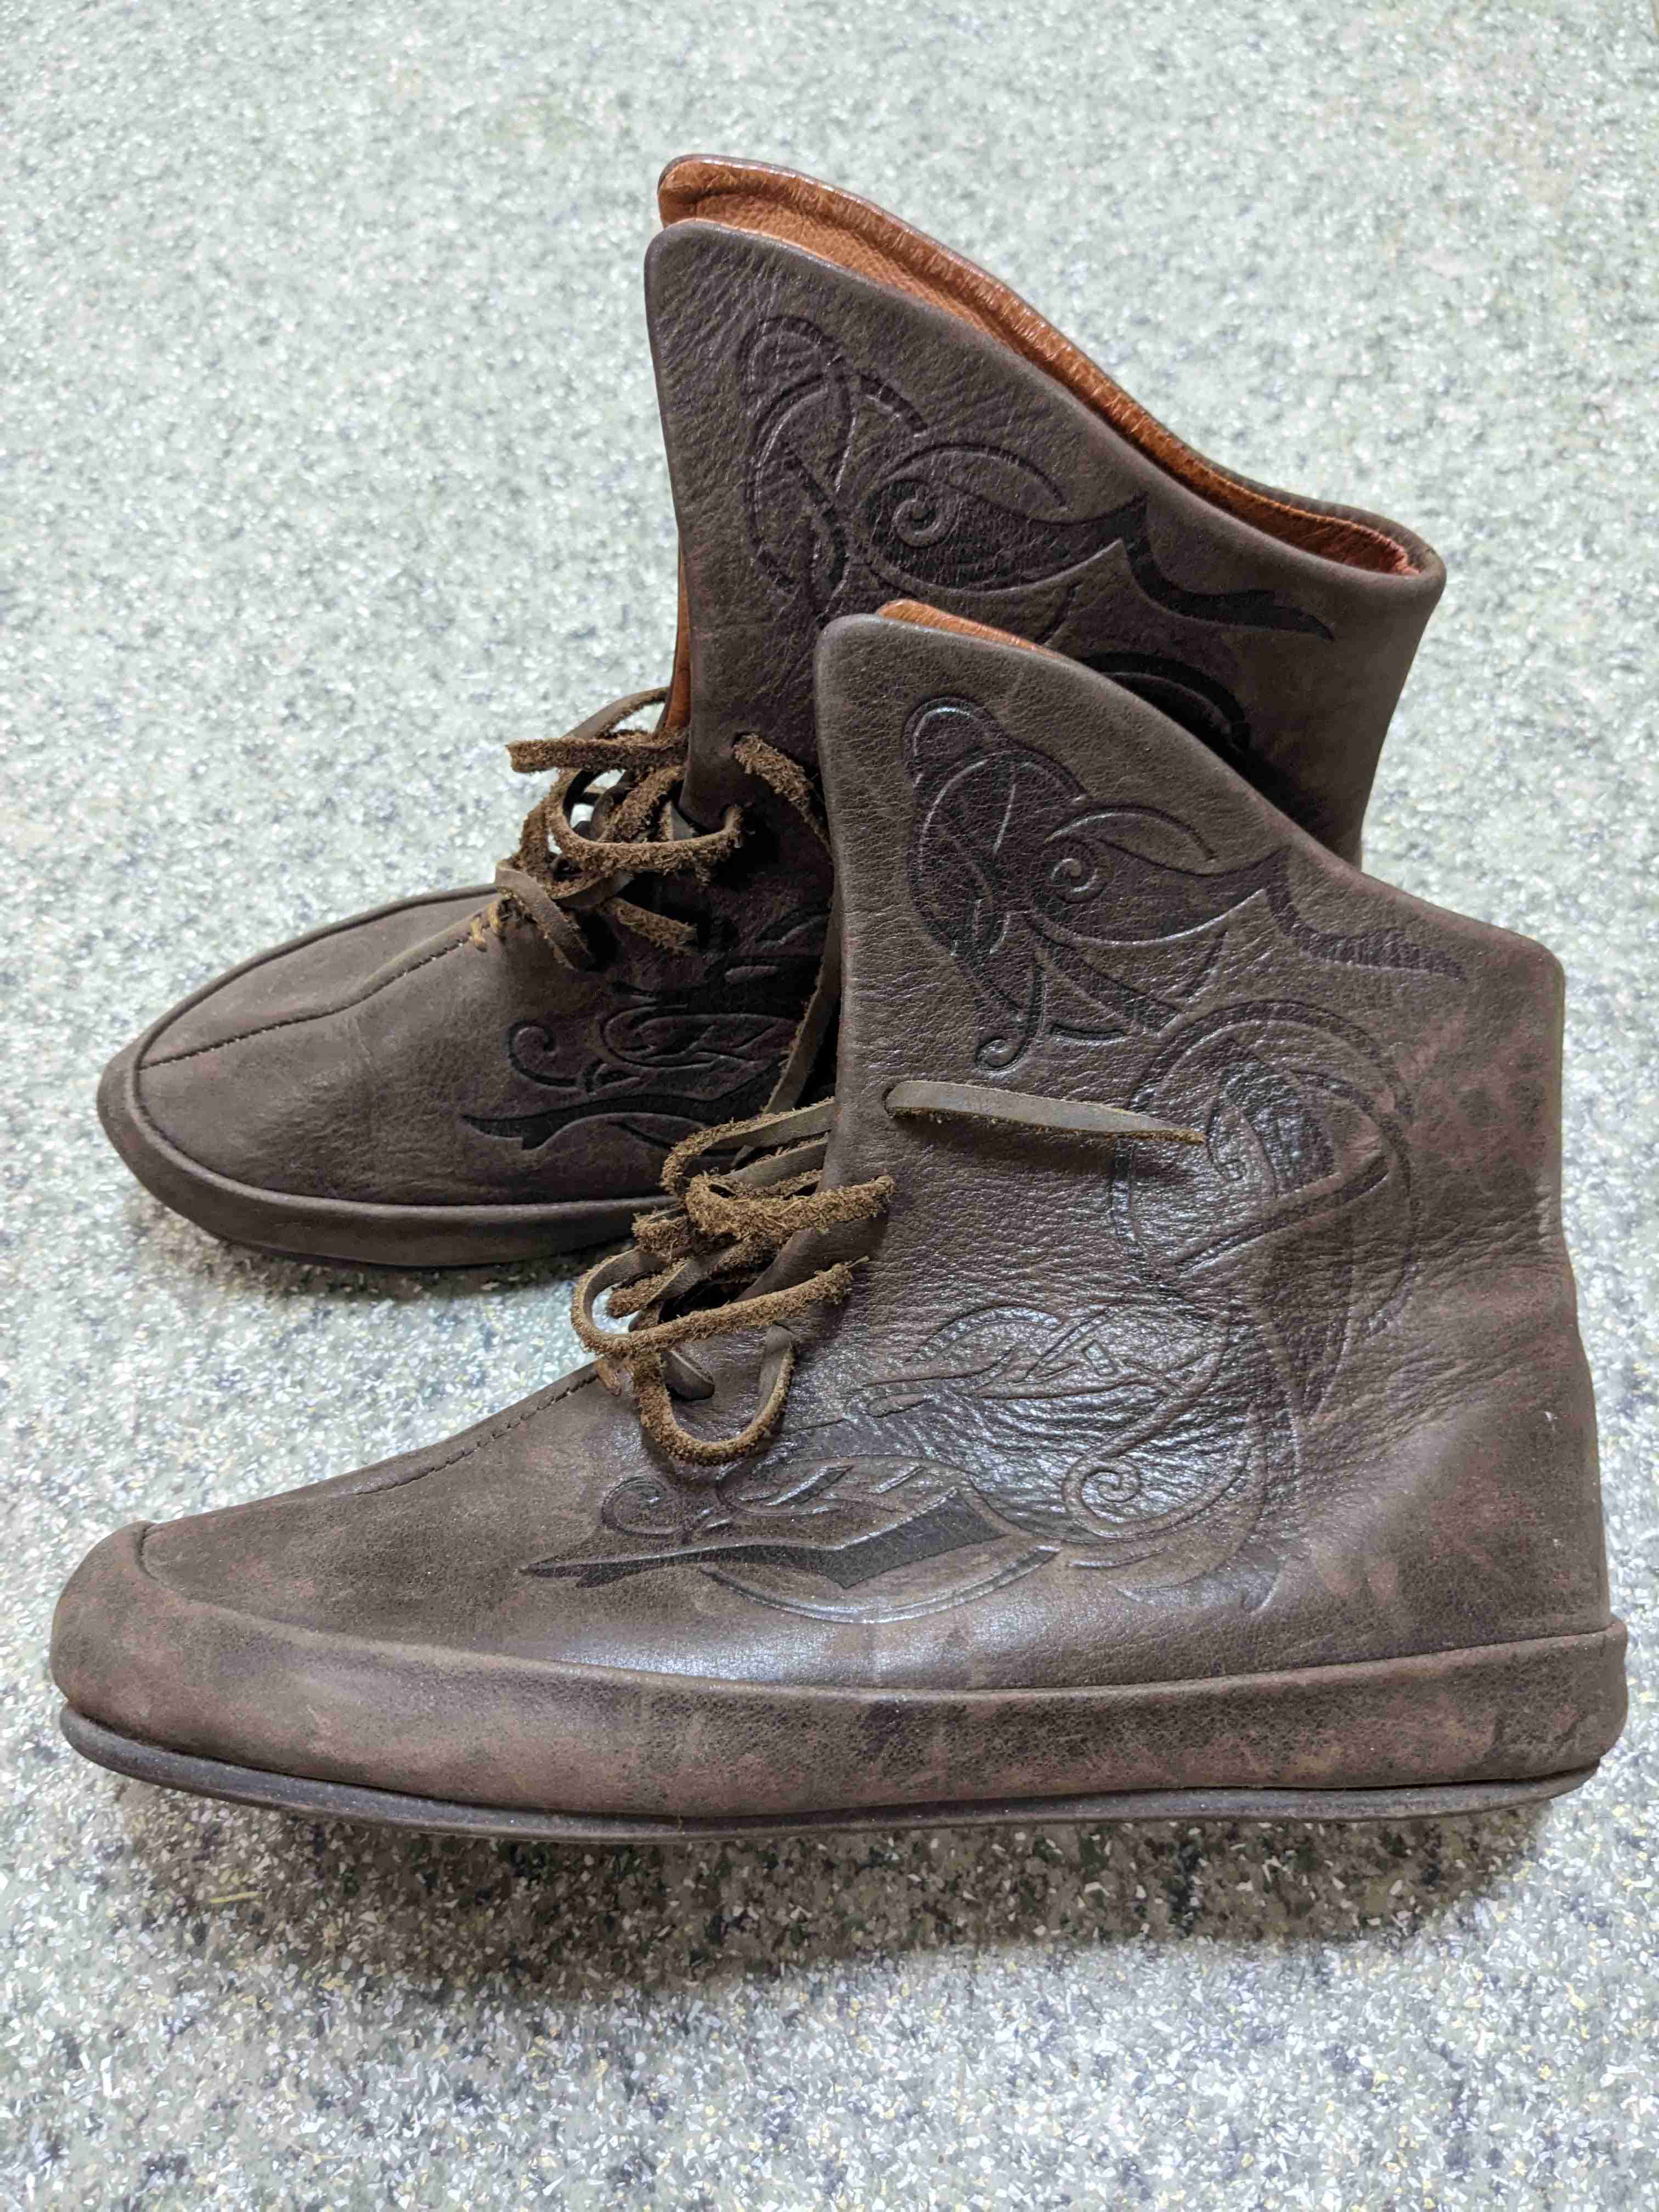 Sale “Gudrun the Wolfdottir” Laced Viking Shoes